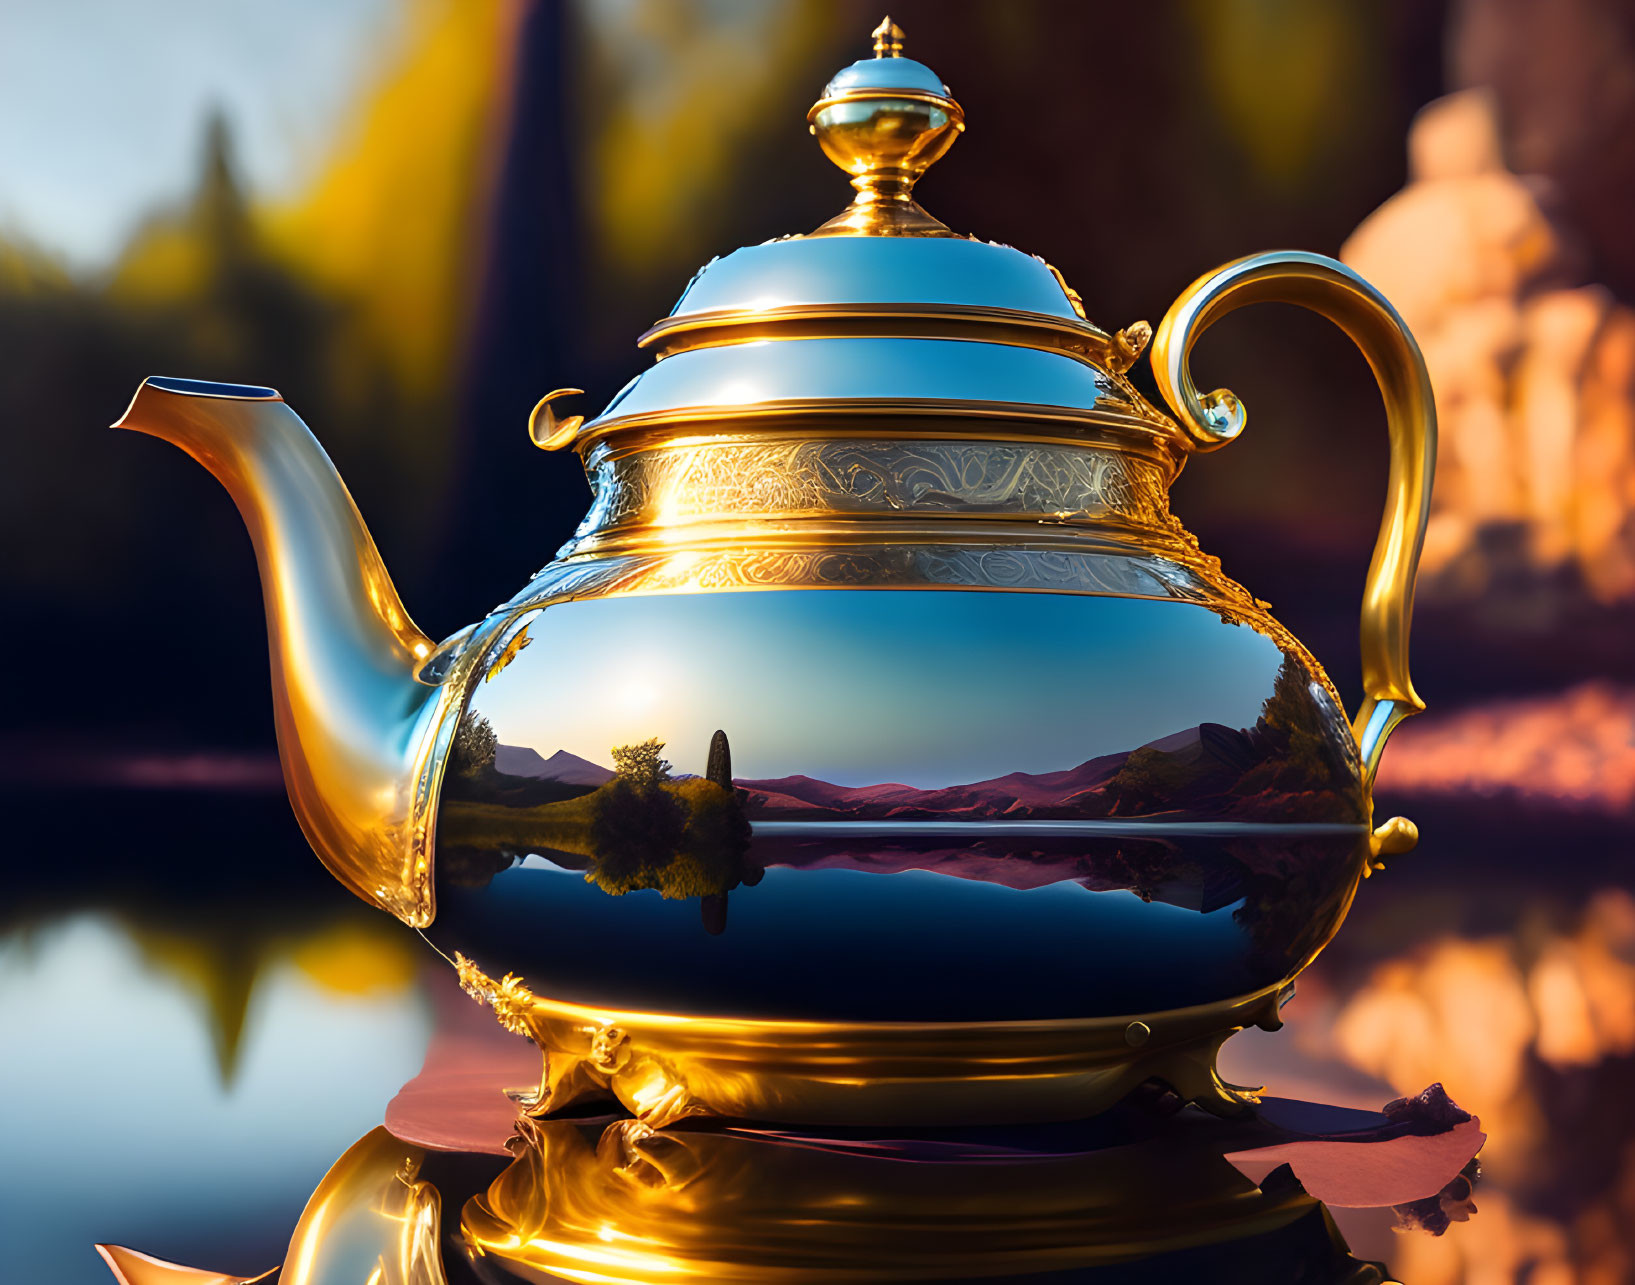 Beautiful old teapot